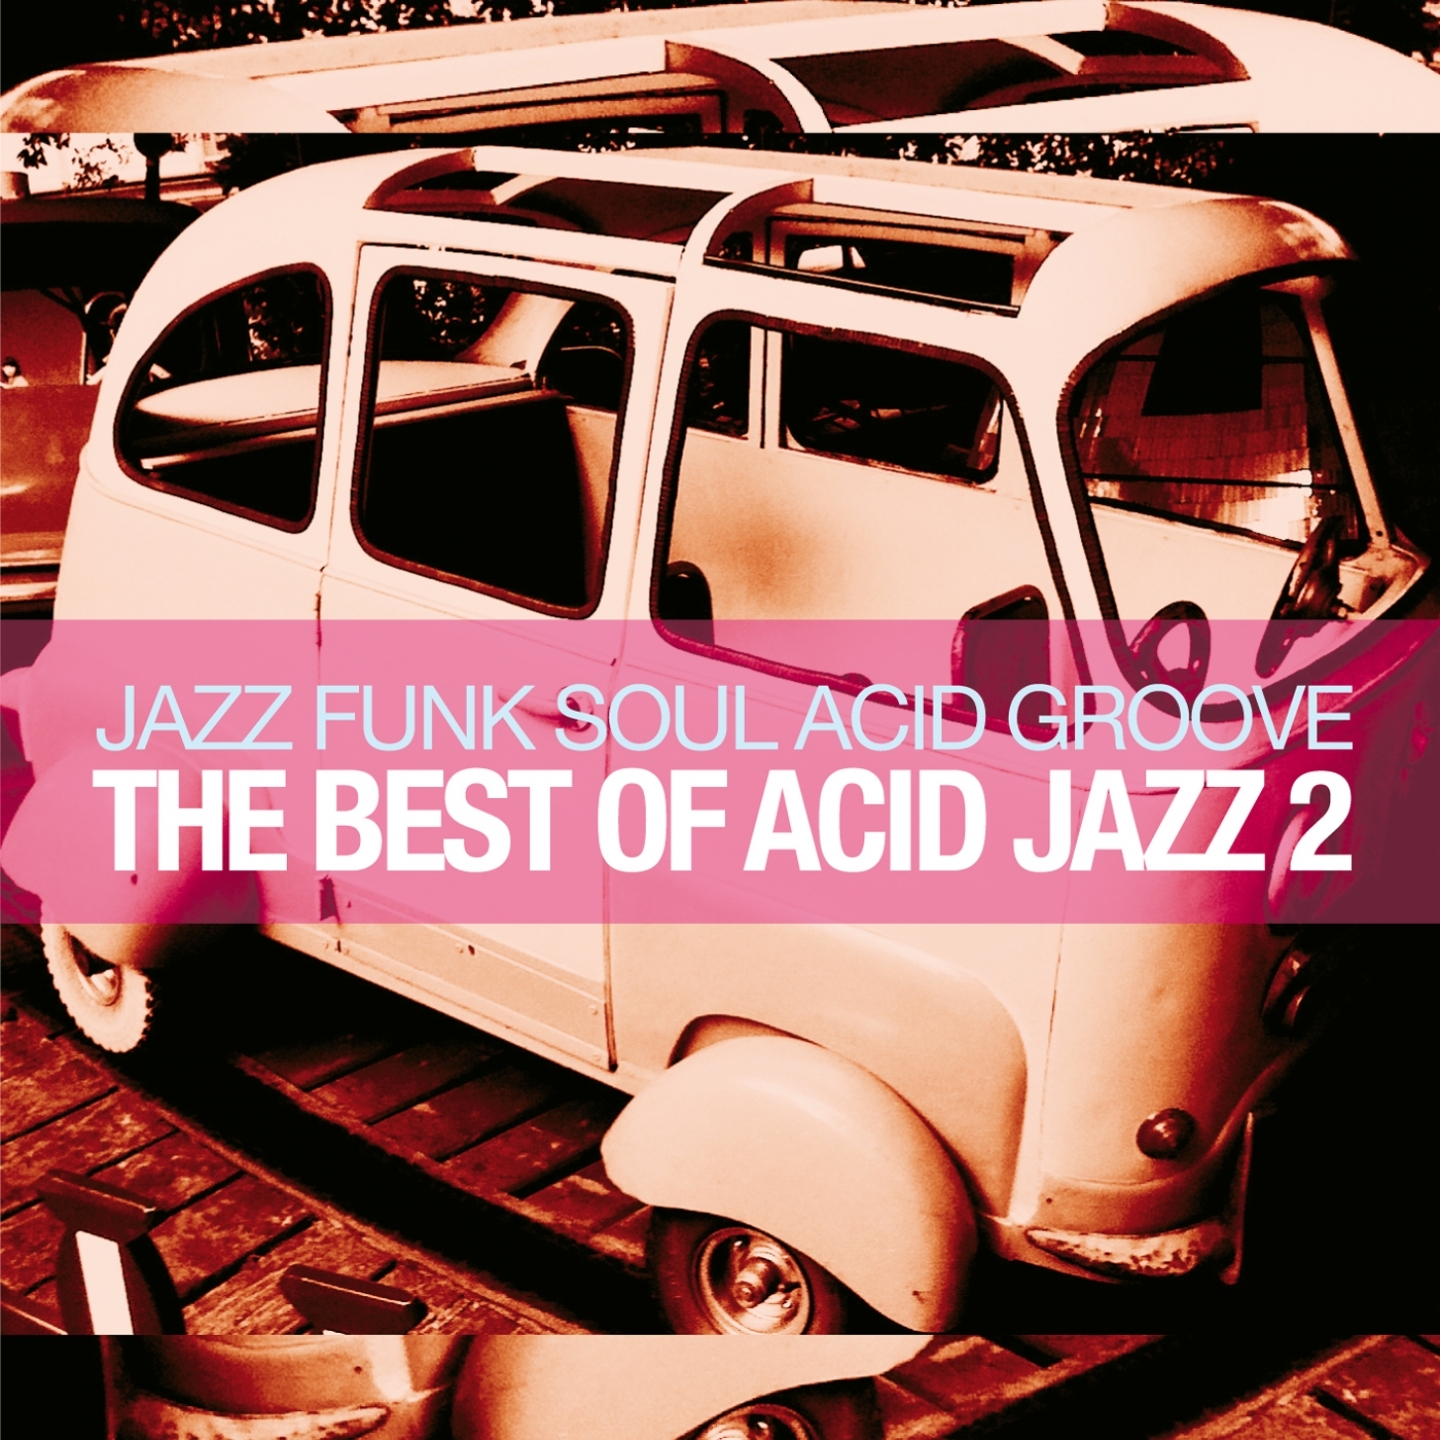 The Best Of Acid Jazz, Vol. 2 (Jazz Funk Soul Acid Groove)